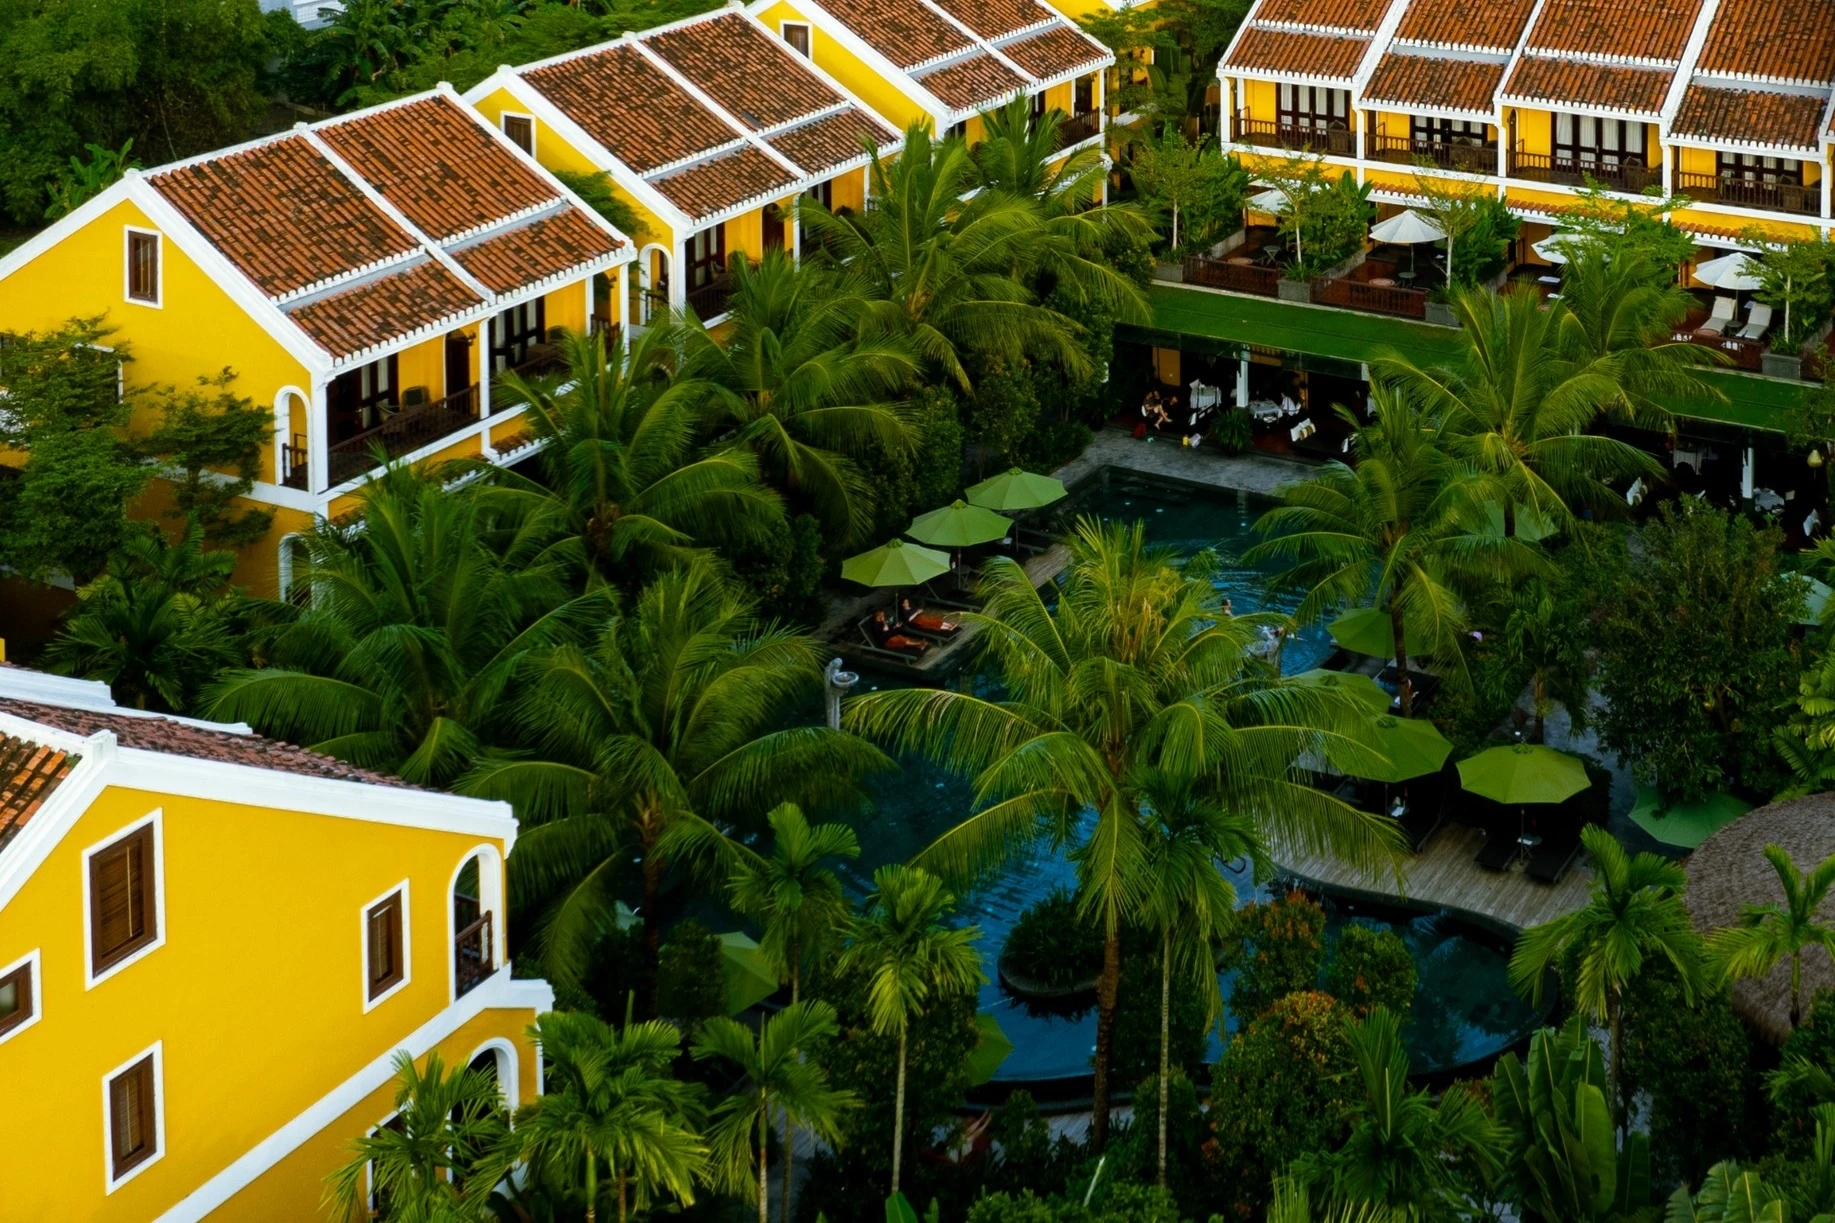 La Siesta Hoi An Resort & Spa